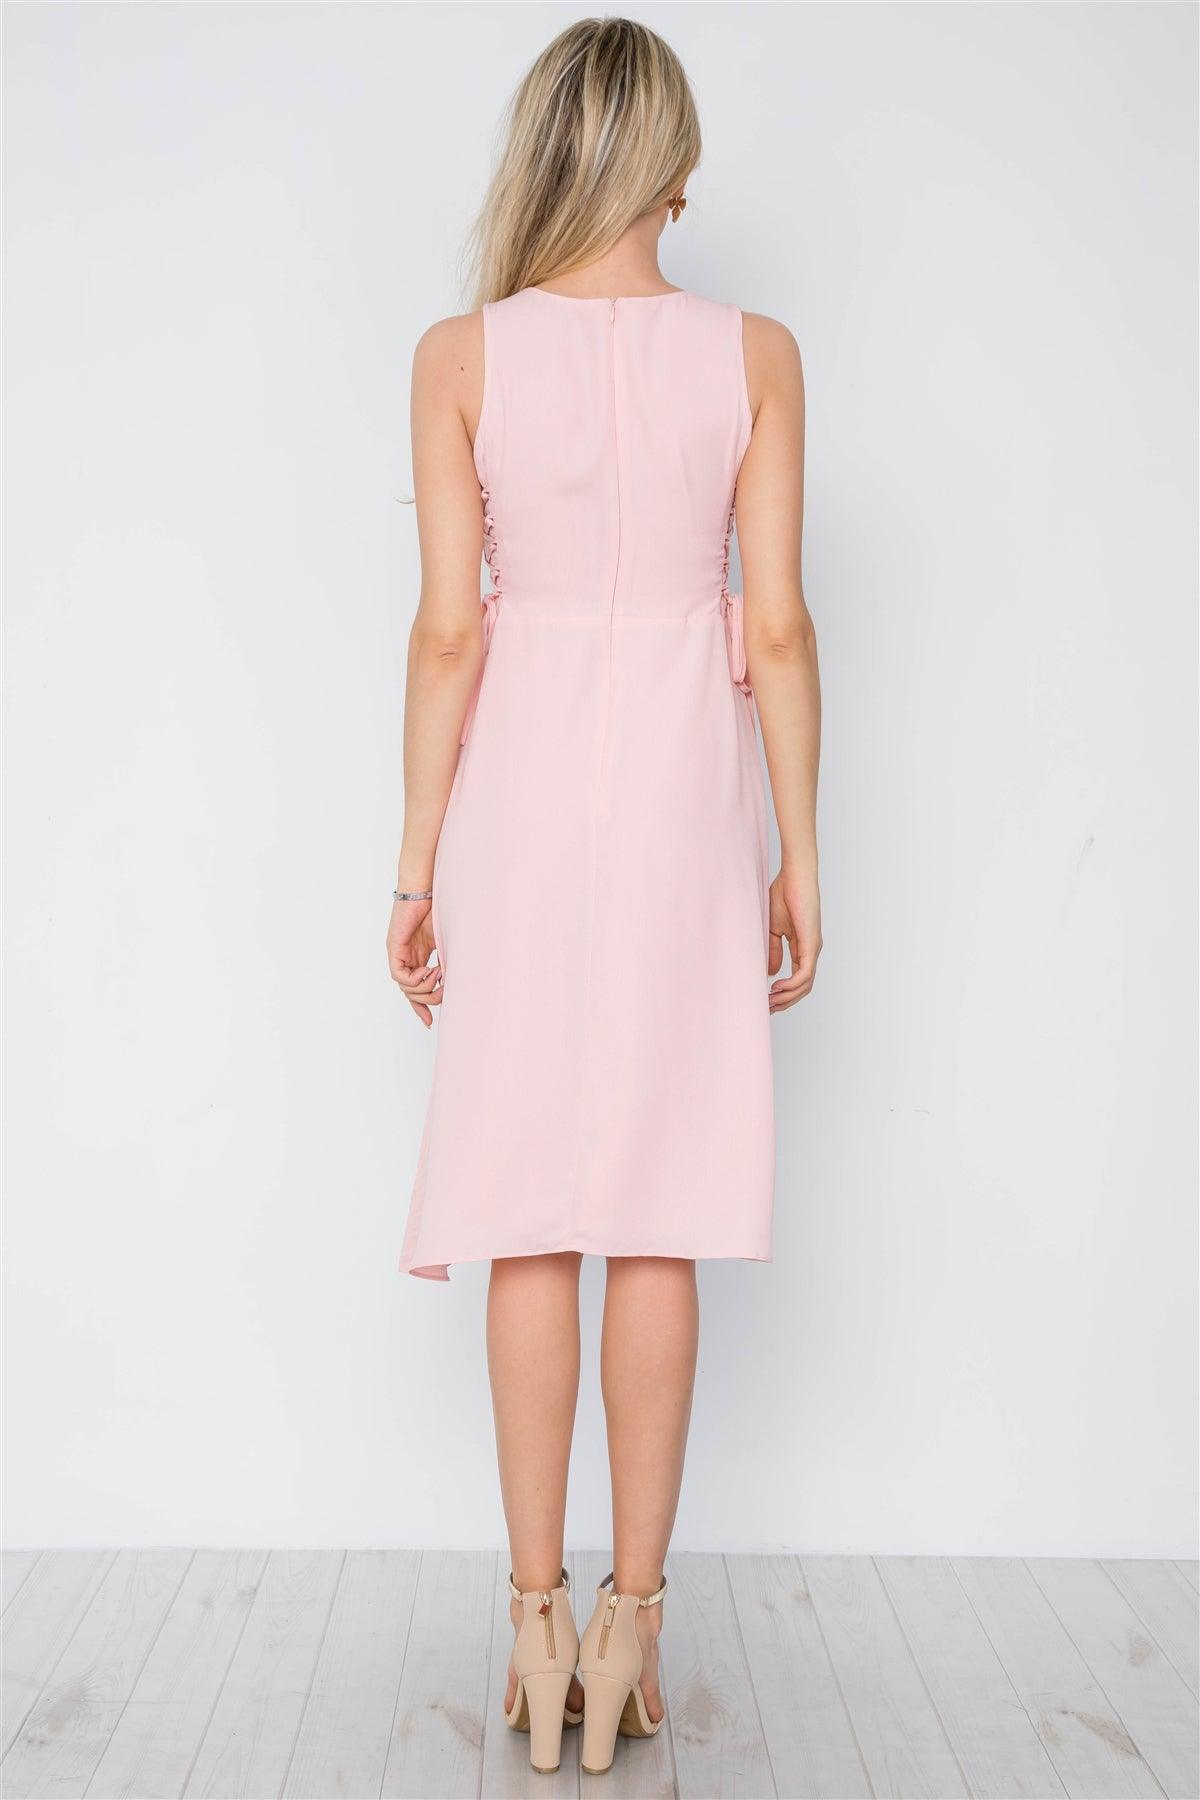 Blush Lace Up Sides Sleeveless Solid Midi Dress /1-2-2-1